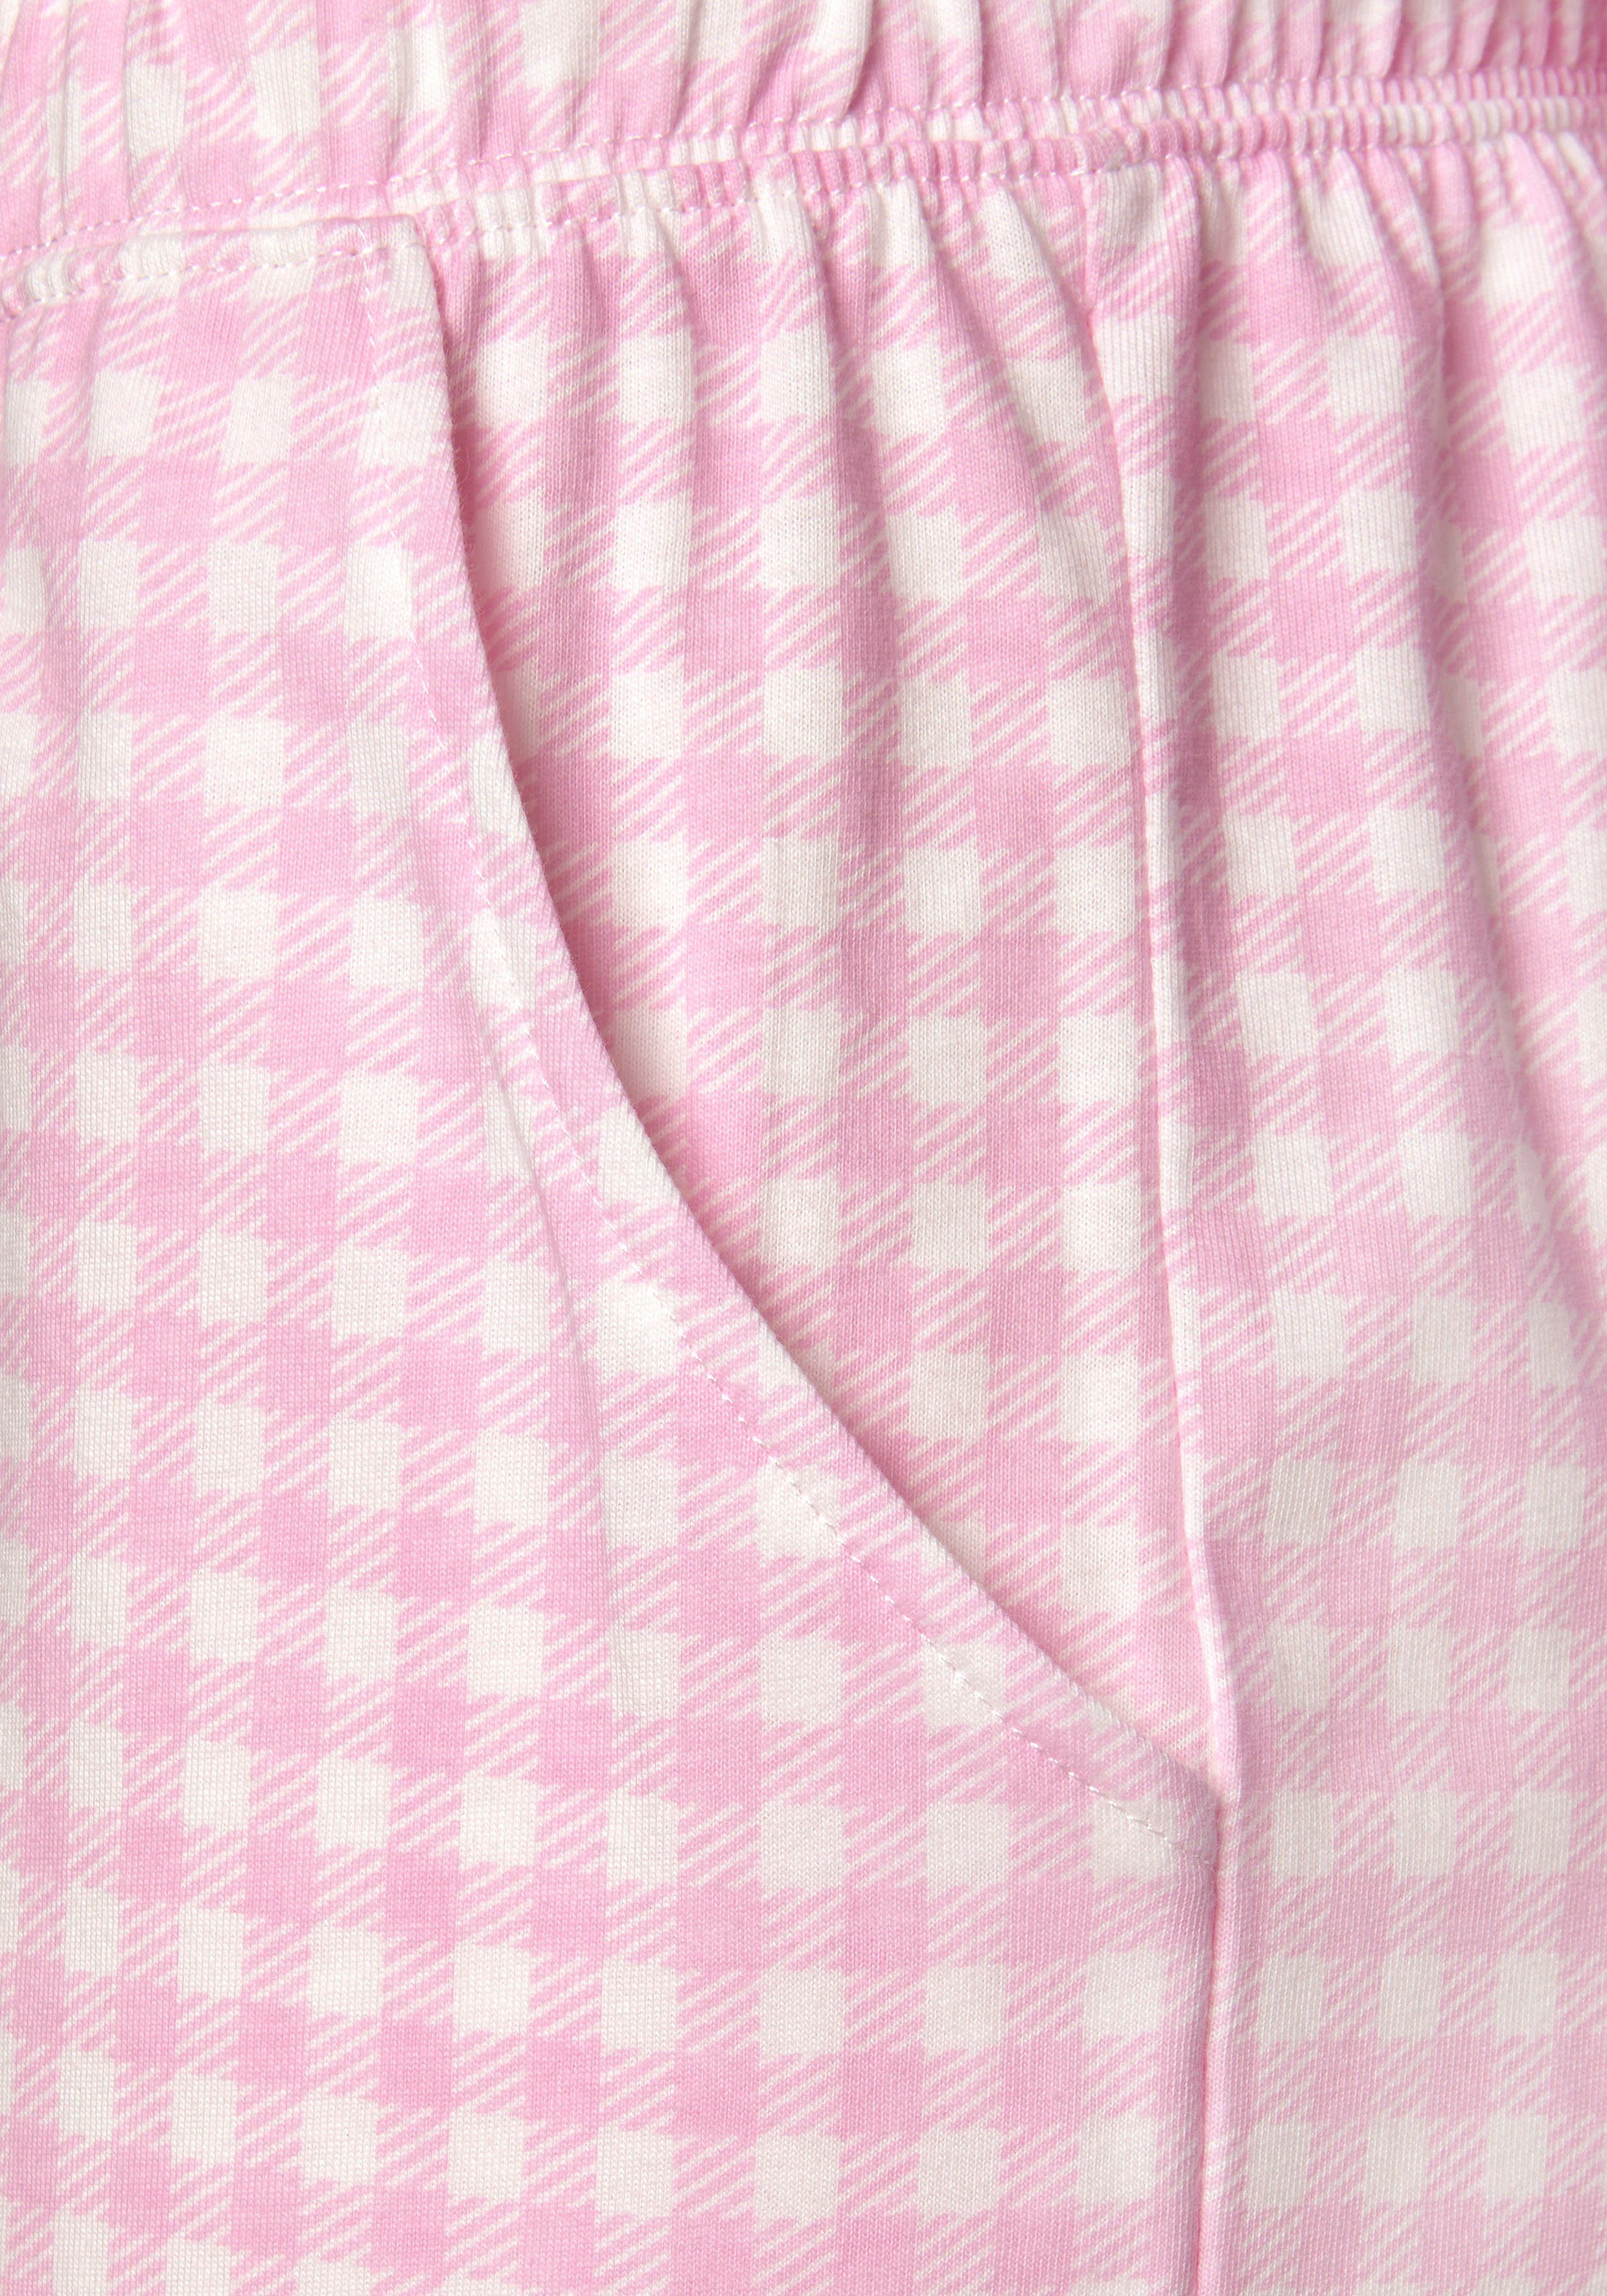 s.Oliver Pyjama tlg., 1 Stück) (2 rosa-kariert